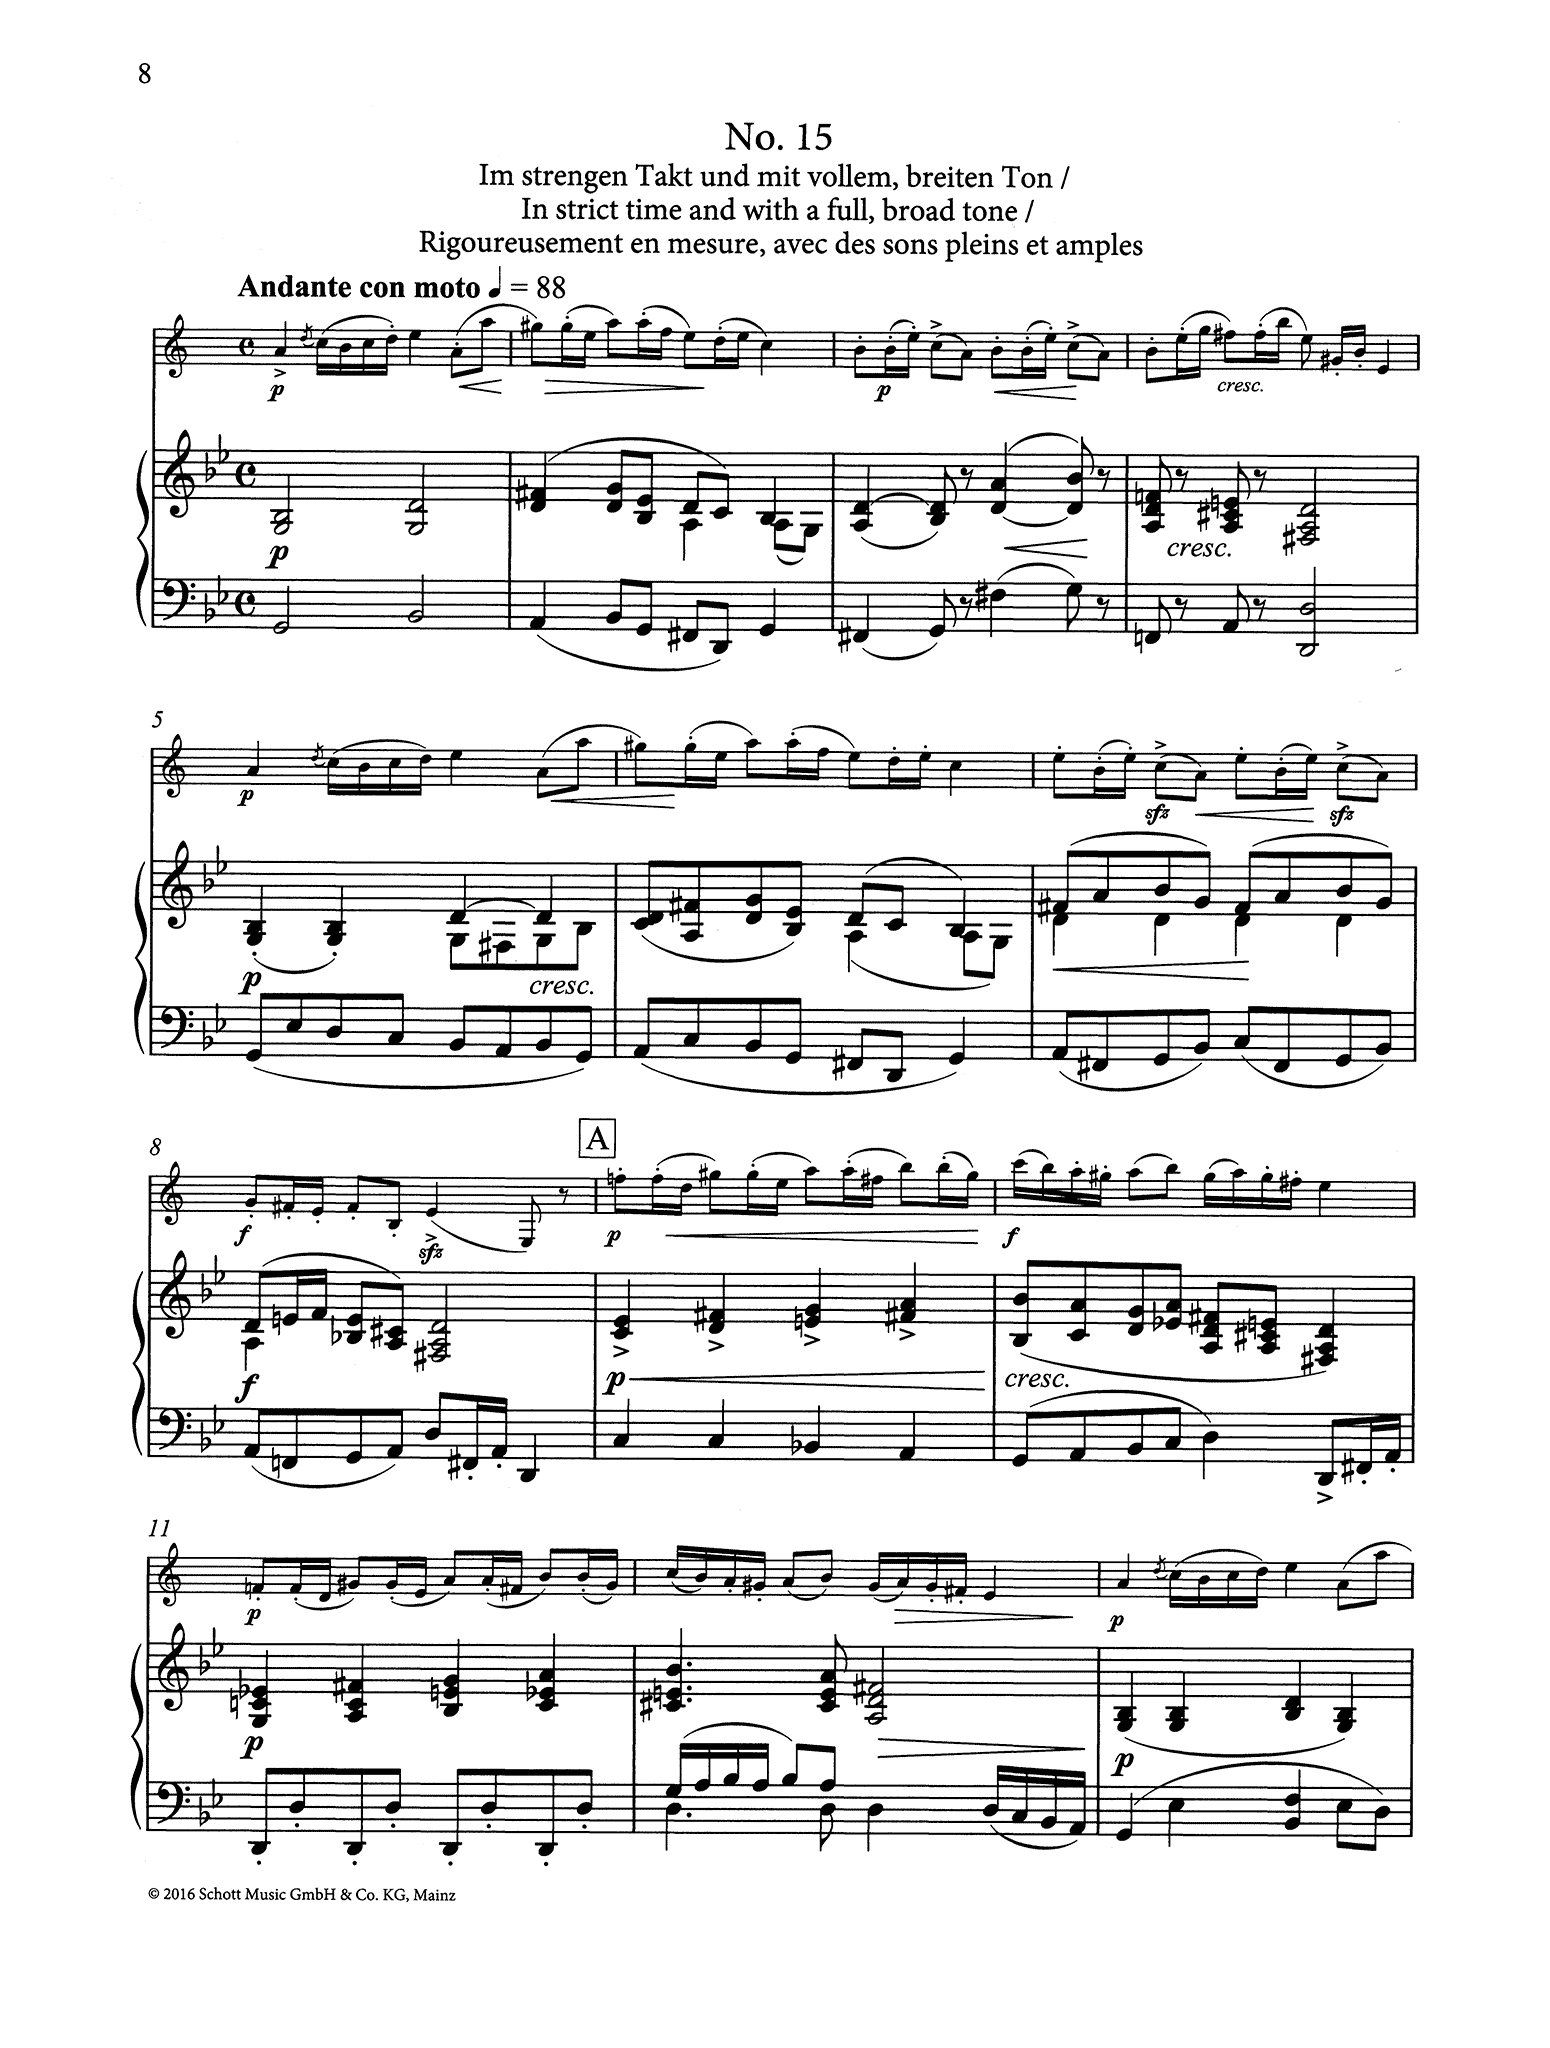 Baermann Clarinet Method Tune Book 1 Number 15